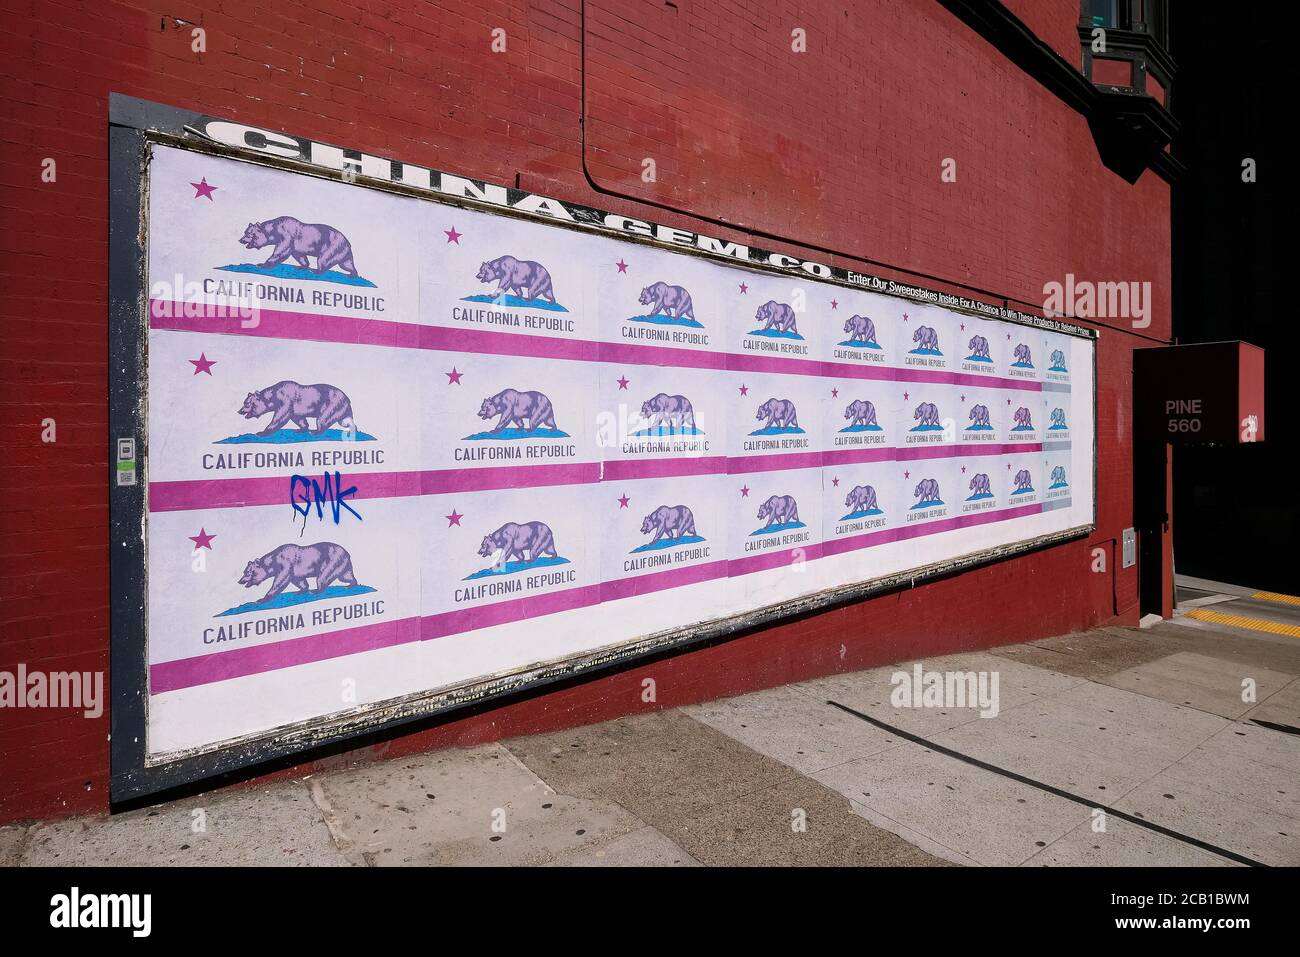 Billboard with California Republic posters in Chinatown, San Francisco, California, USA Stock Photo